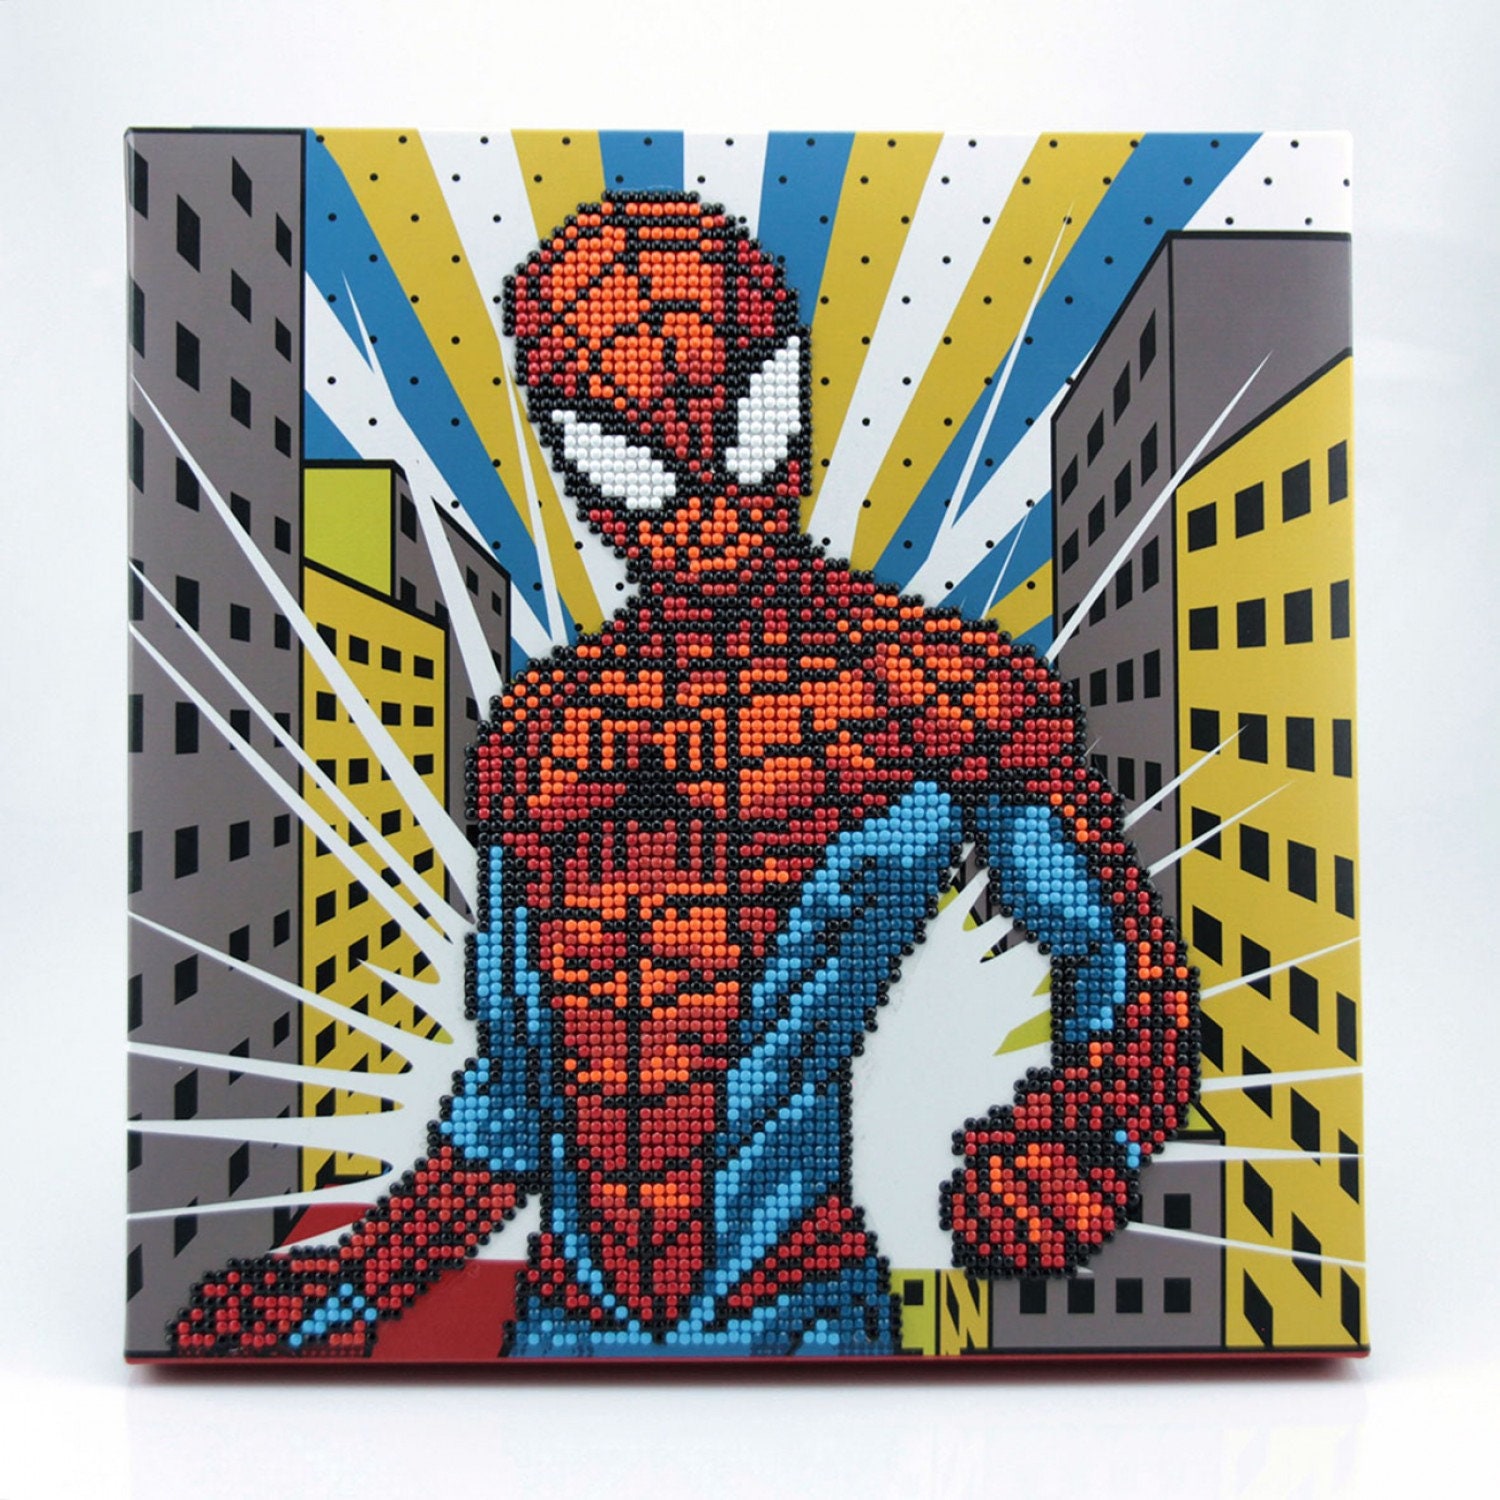 Impressionist Wall Art Movie Star Spider Man Venom Diamond